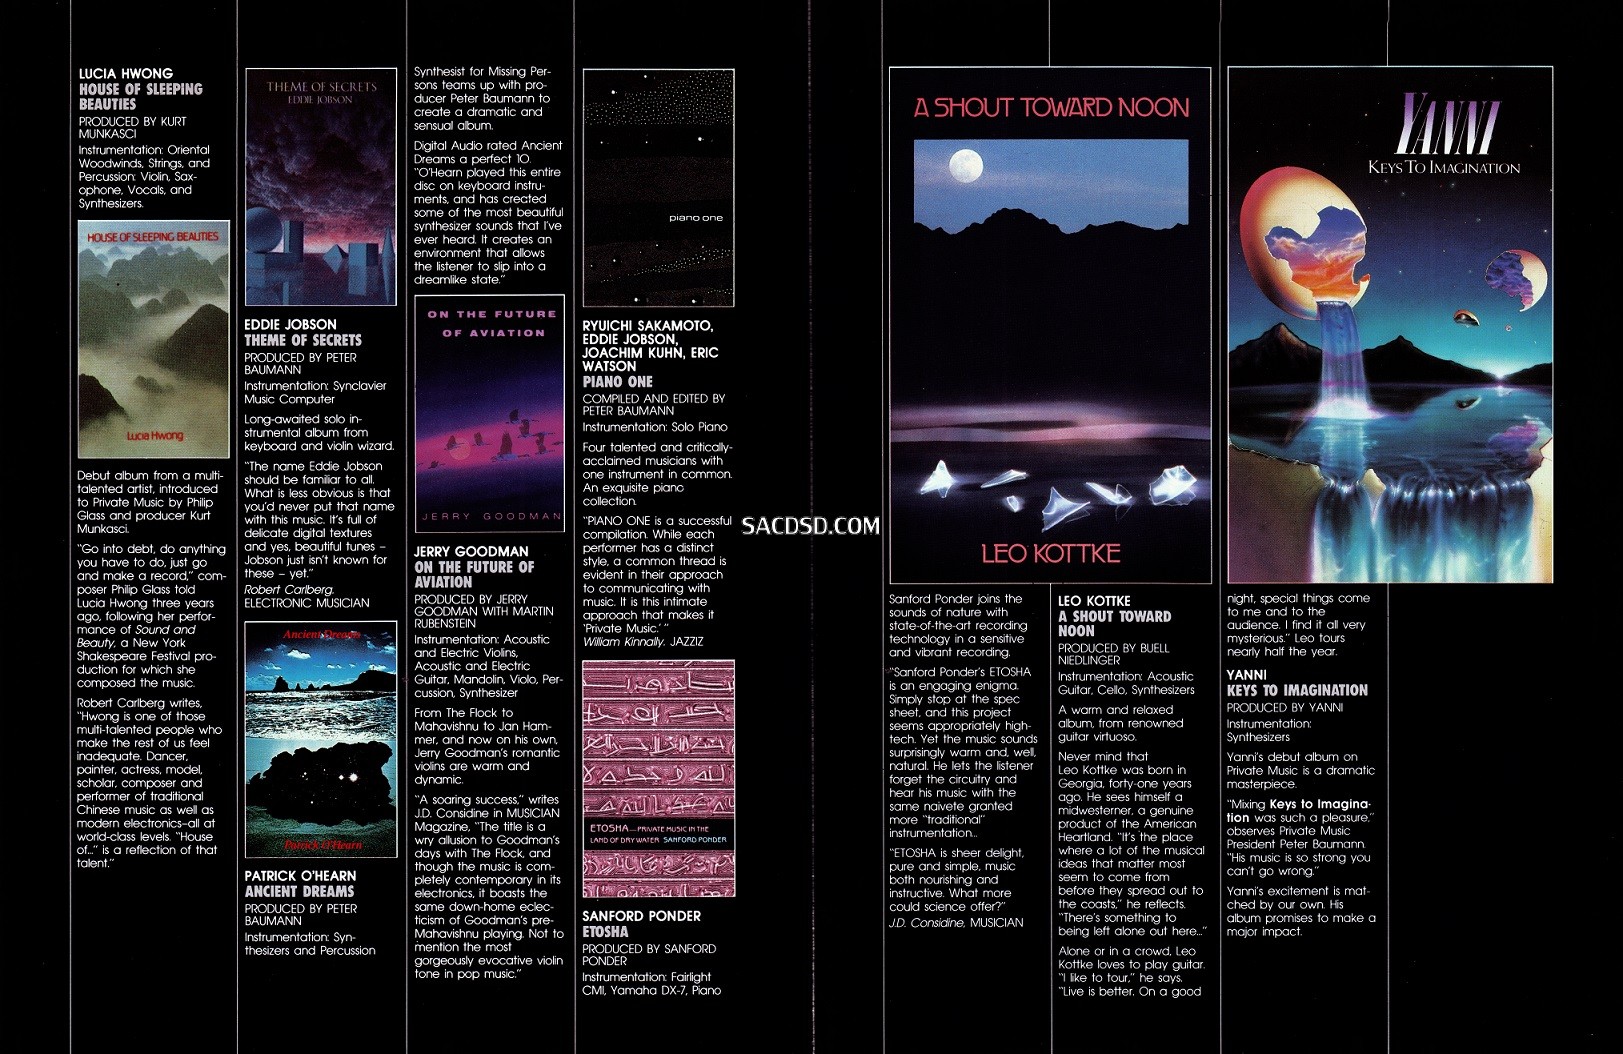 Yanni - Keys To Imagination (front).jpg